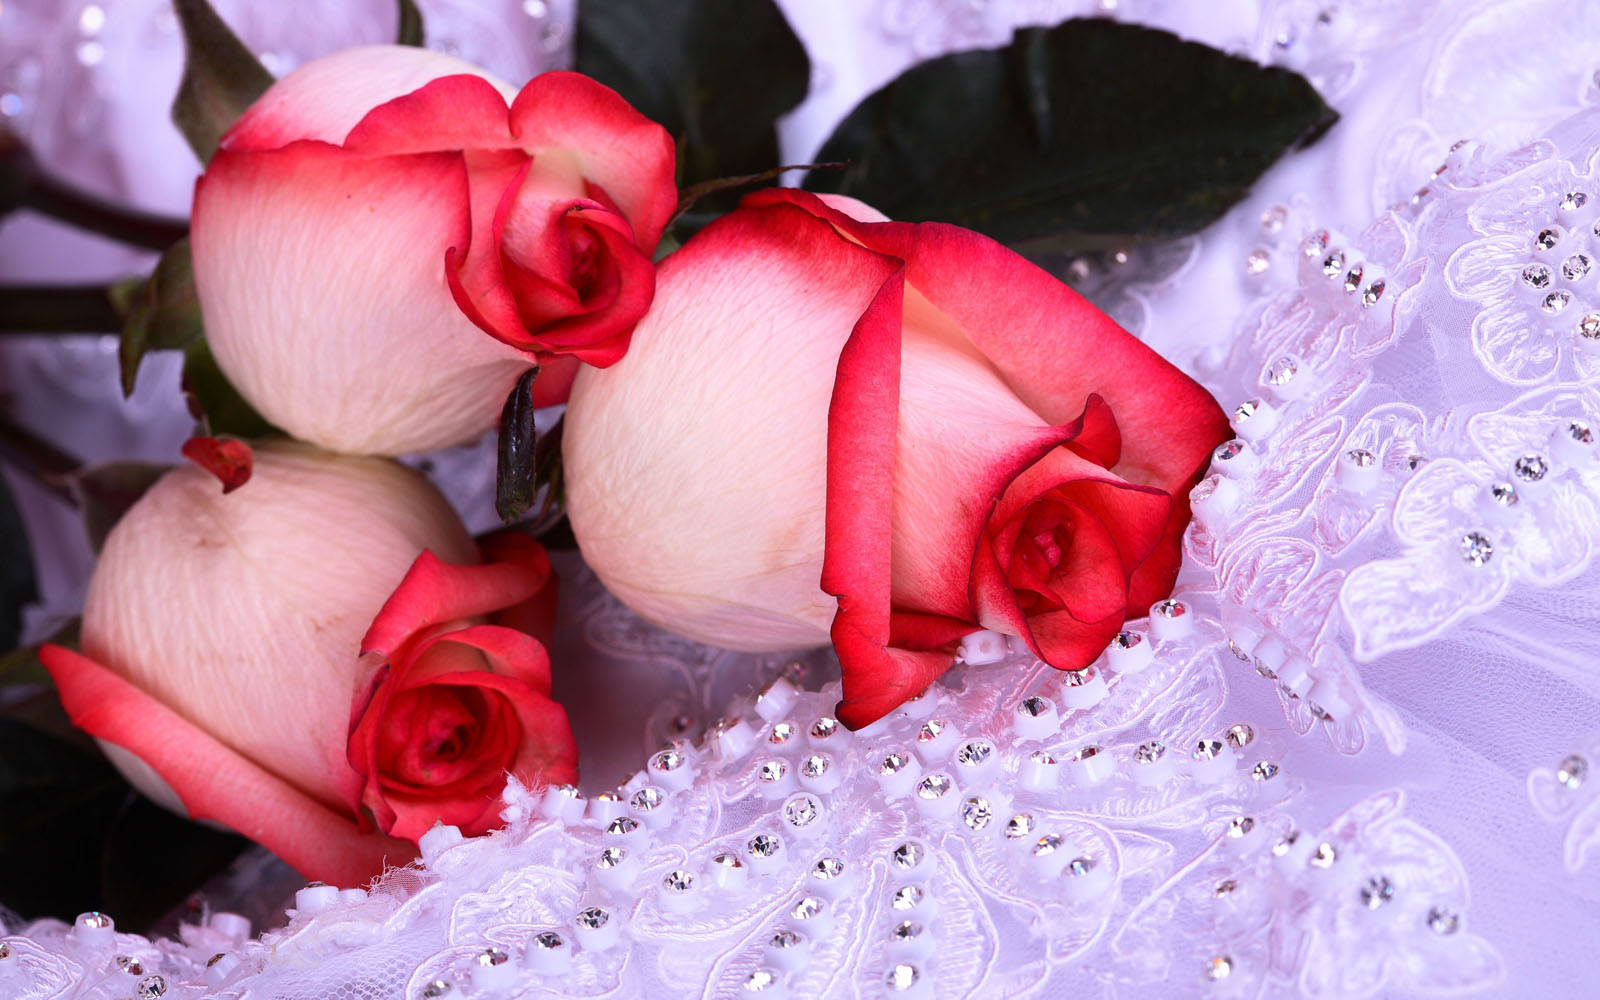 rose wallpaper hd,rosado,rosas de jardín,rojo,flor,rosa